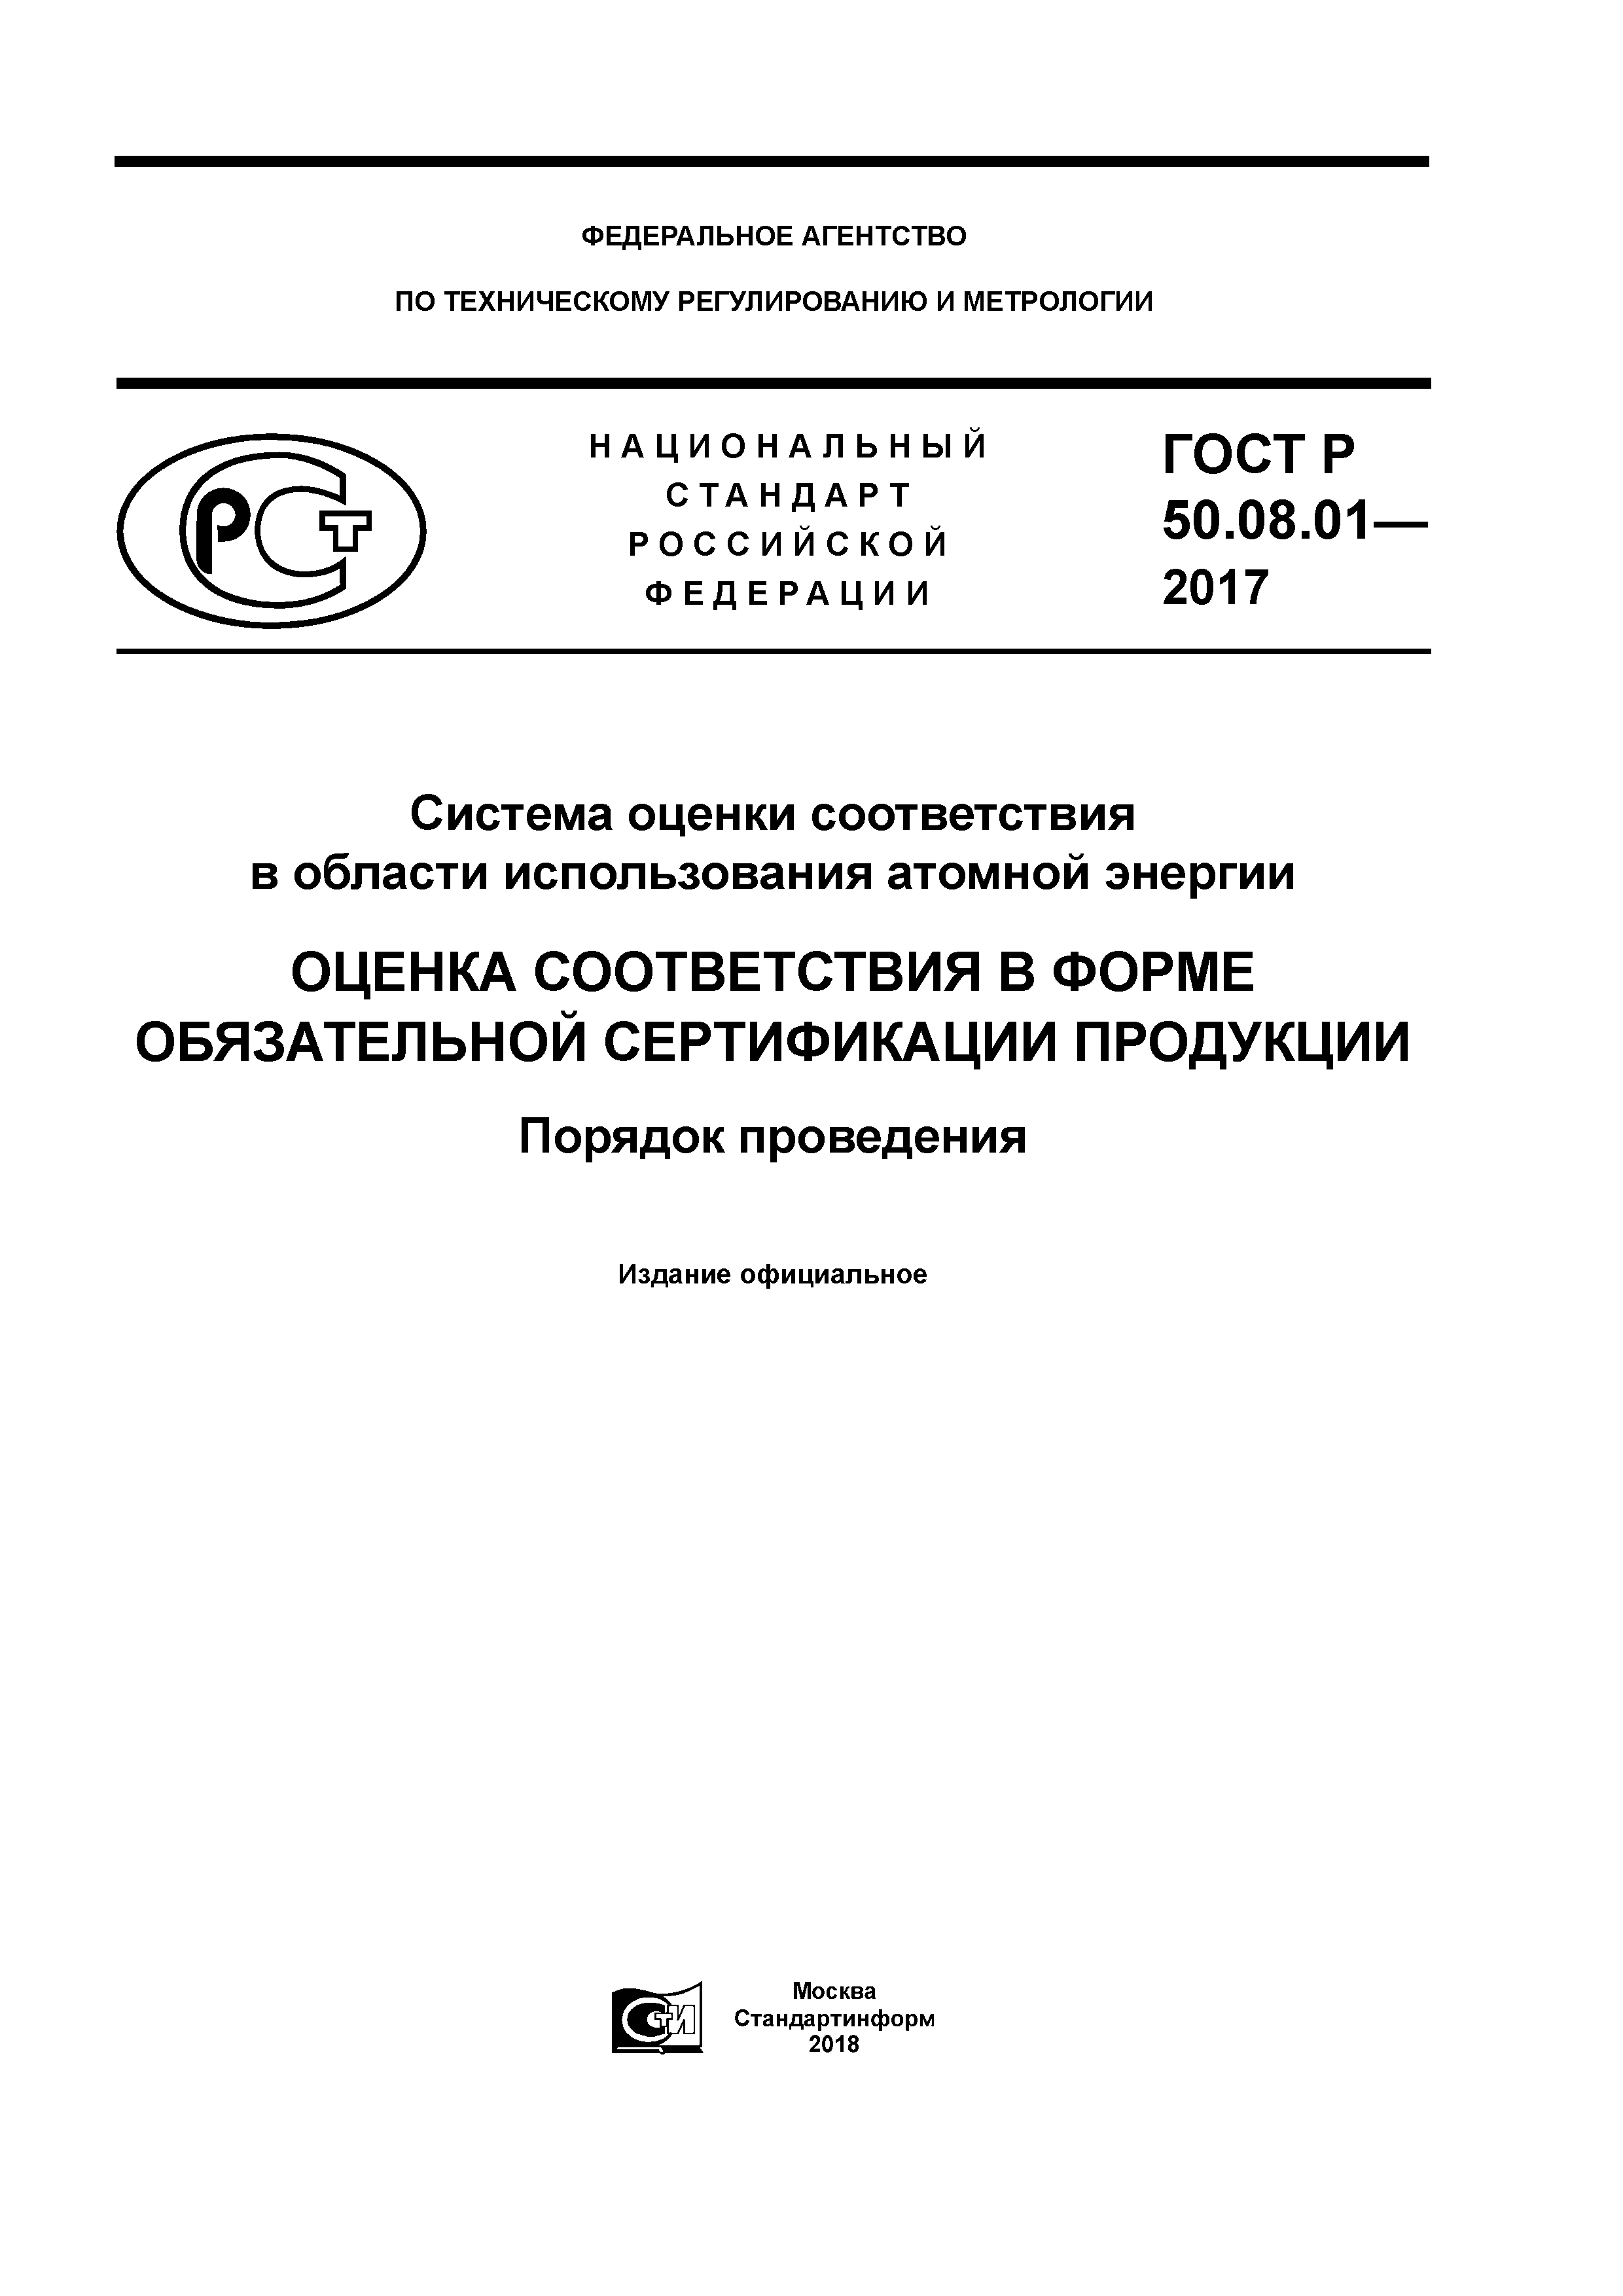 ГОСТ Р 50.08.01-2017